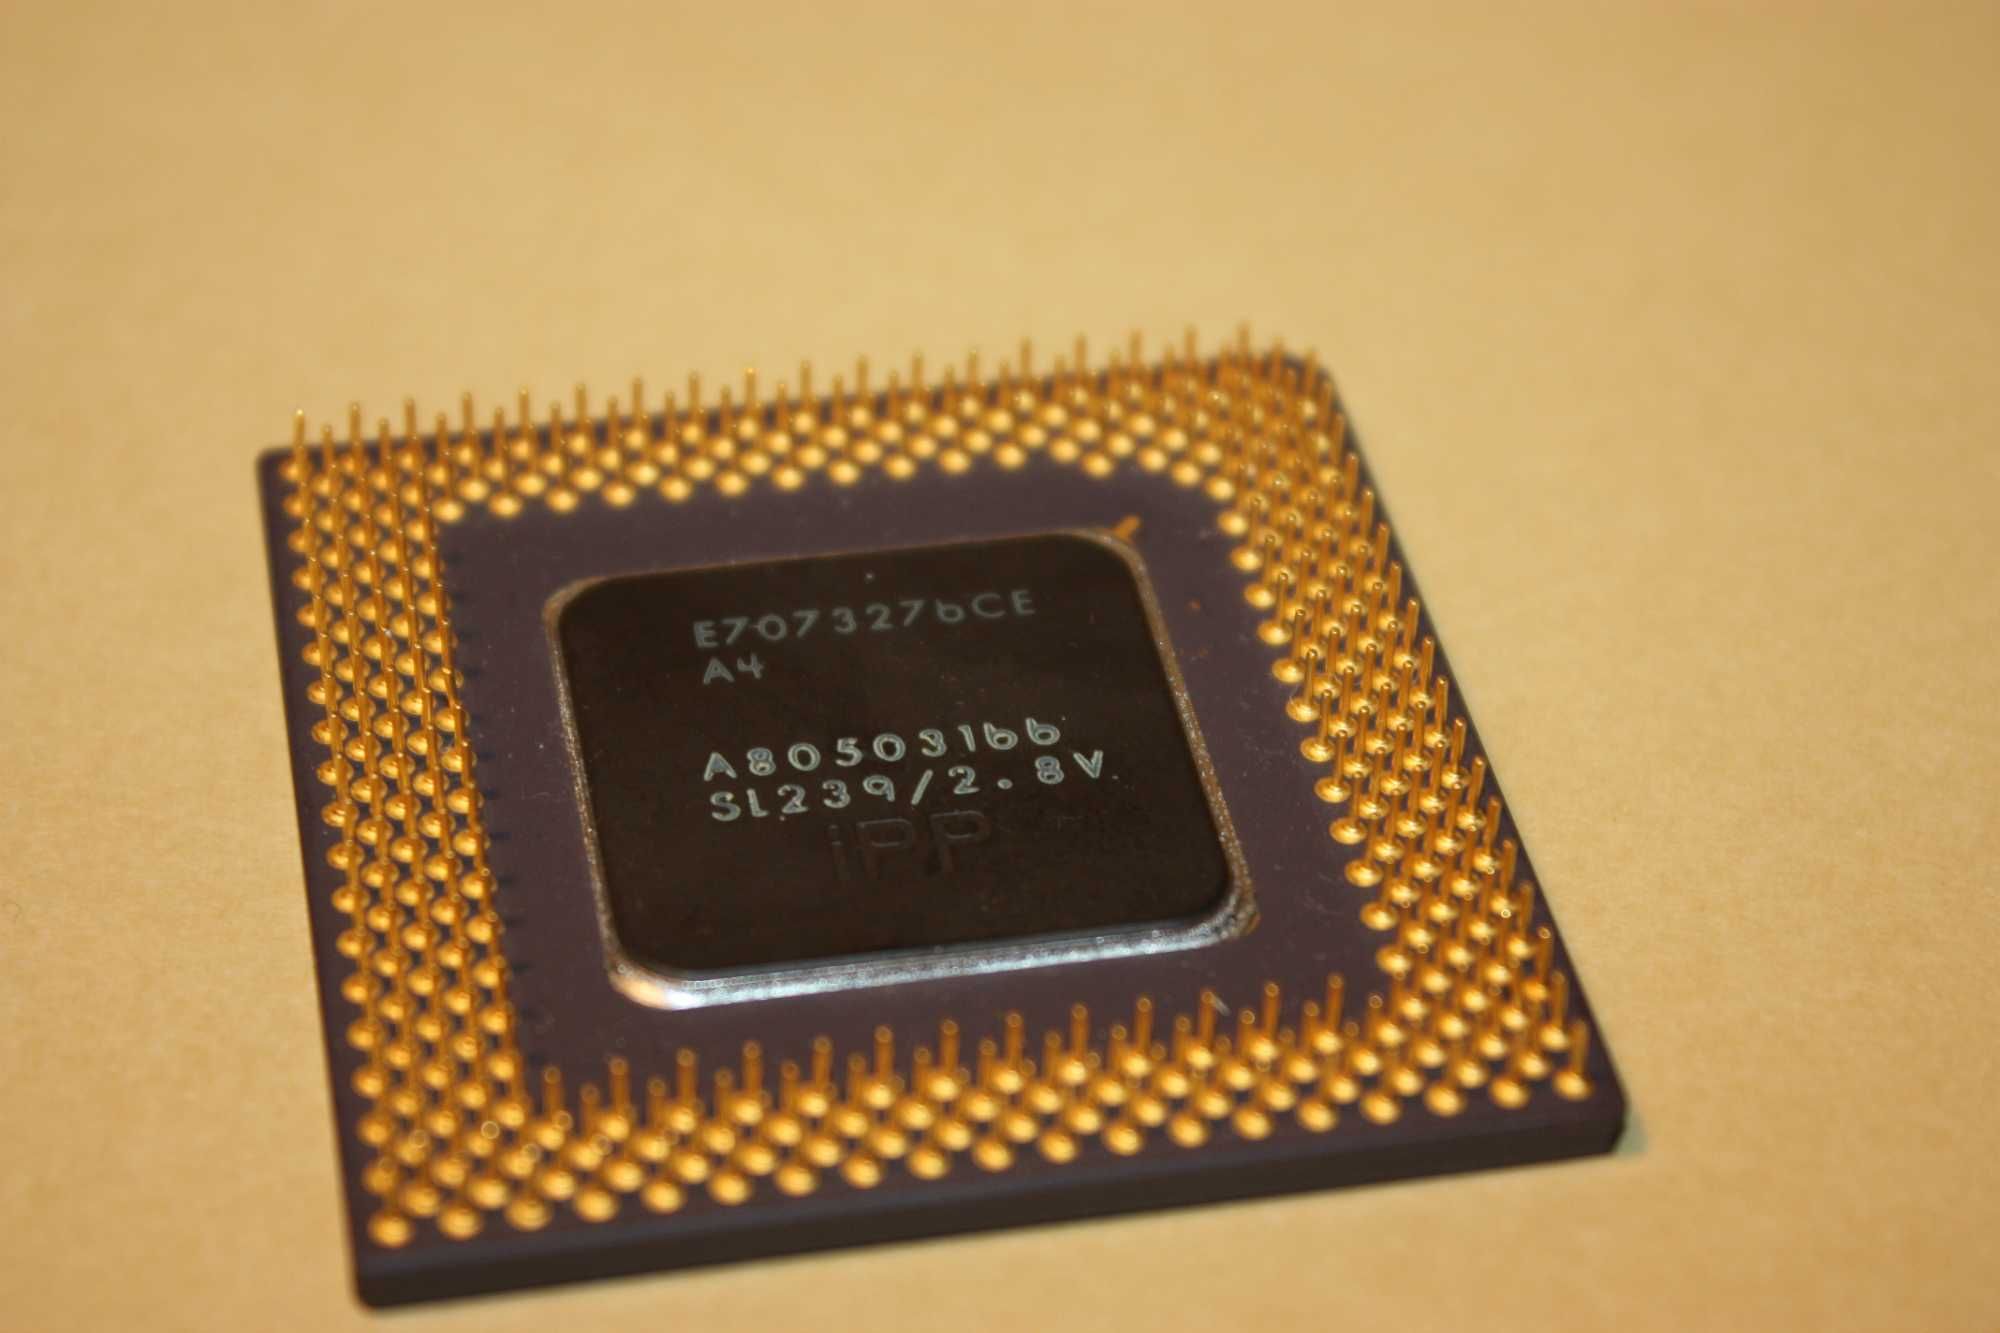 Intel Pentium MMX 166 MHz (A80503166) - Socket 7 (an 1997, retro PC)